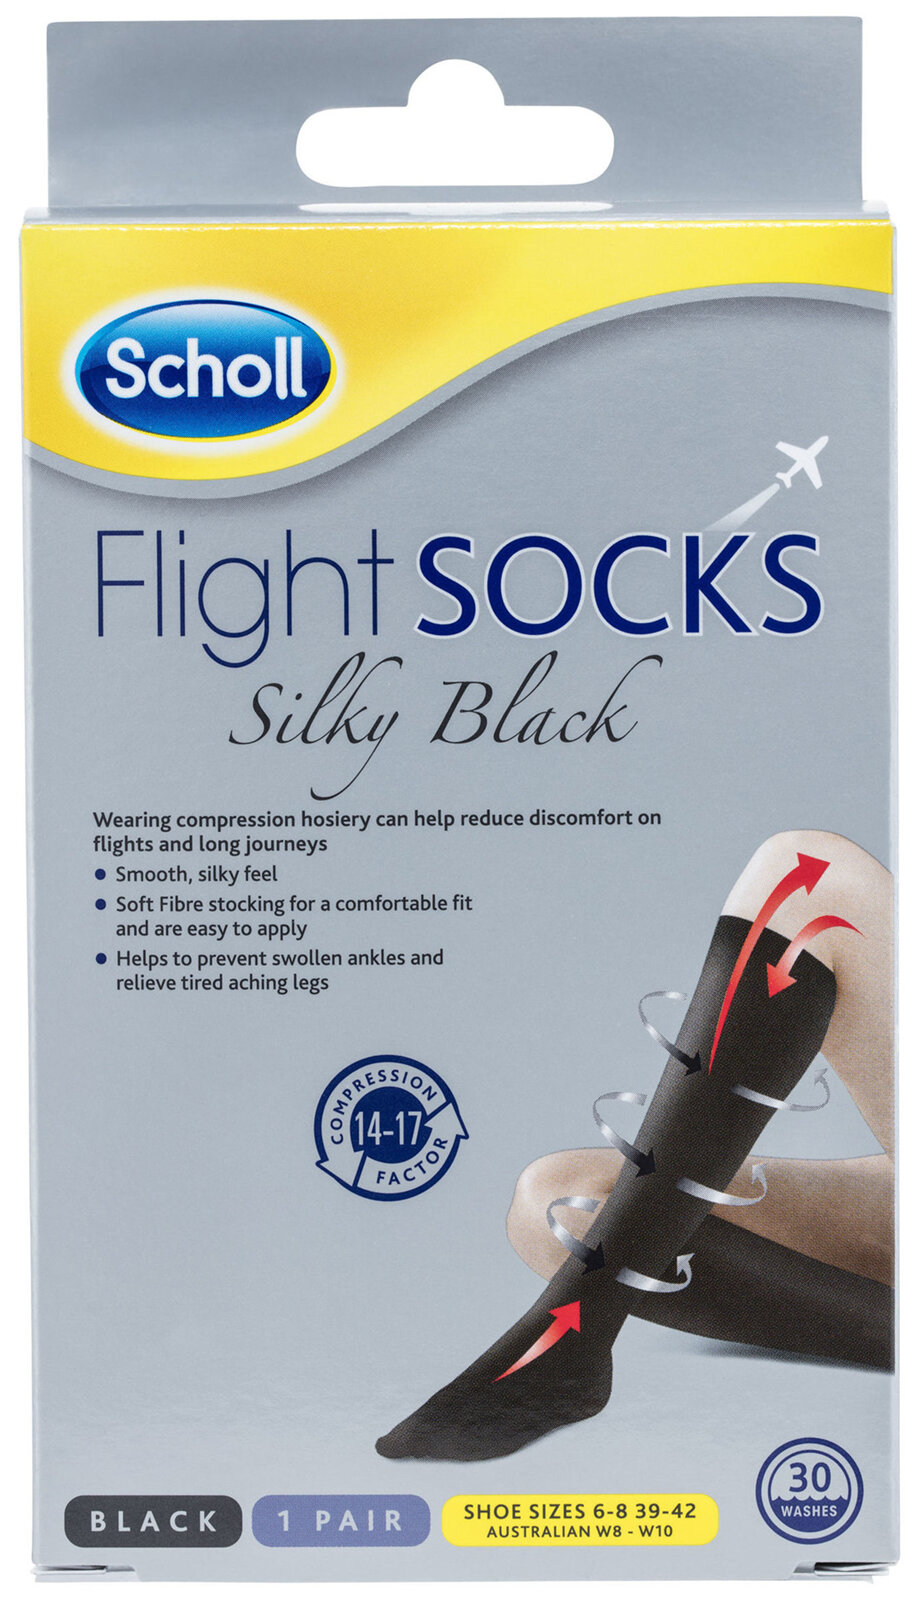 Buy Scholl Flight Socks Natural Ladies 6-8 Online at Chemist